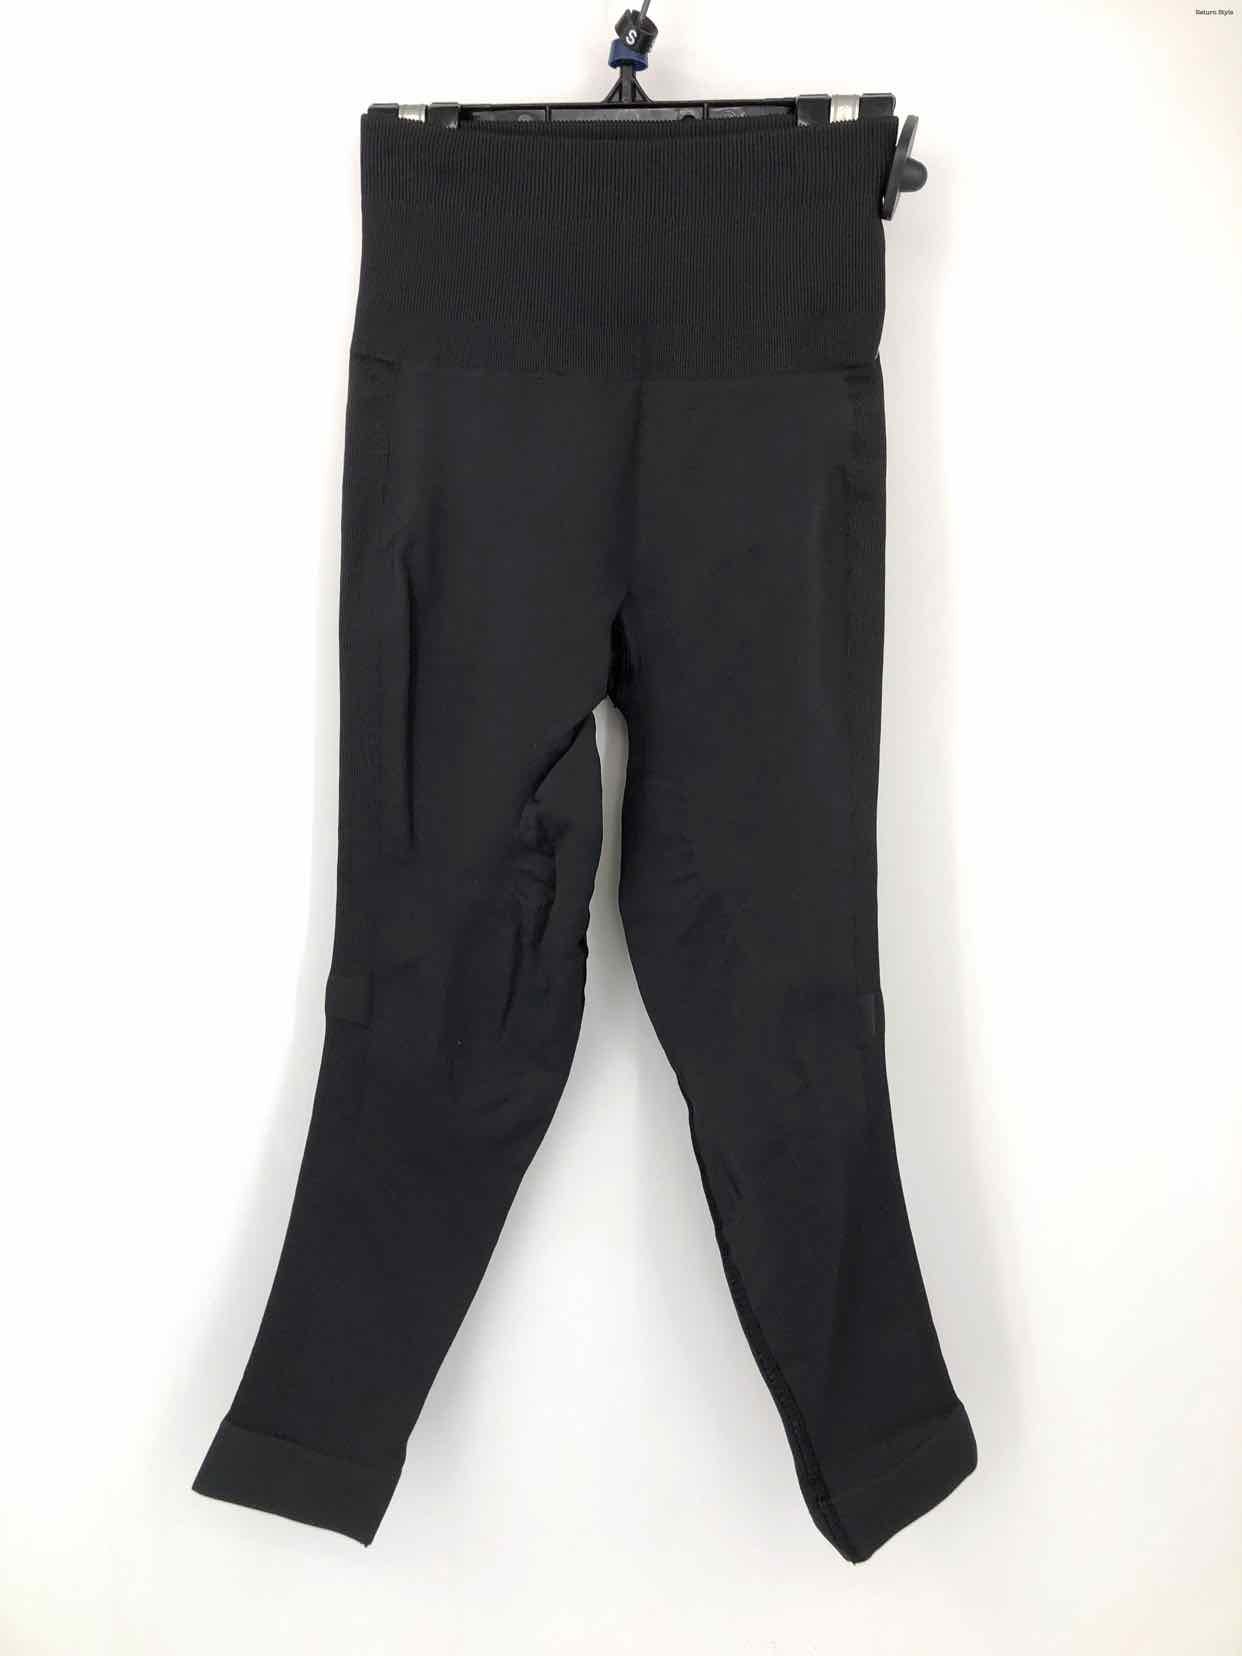 LULULEMON Black Legging Size 4 (S) Activewear Bottoms